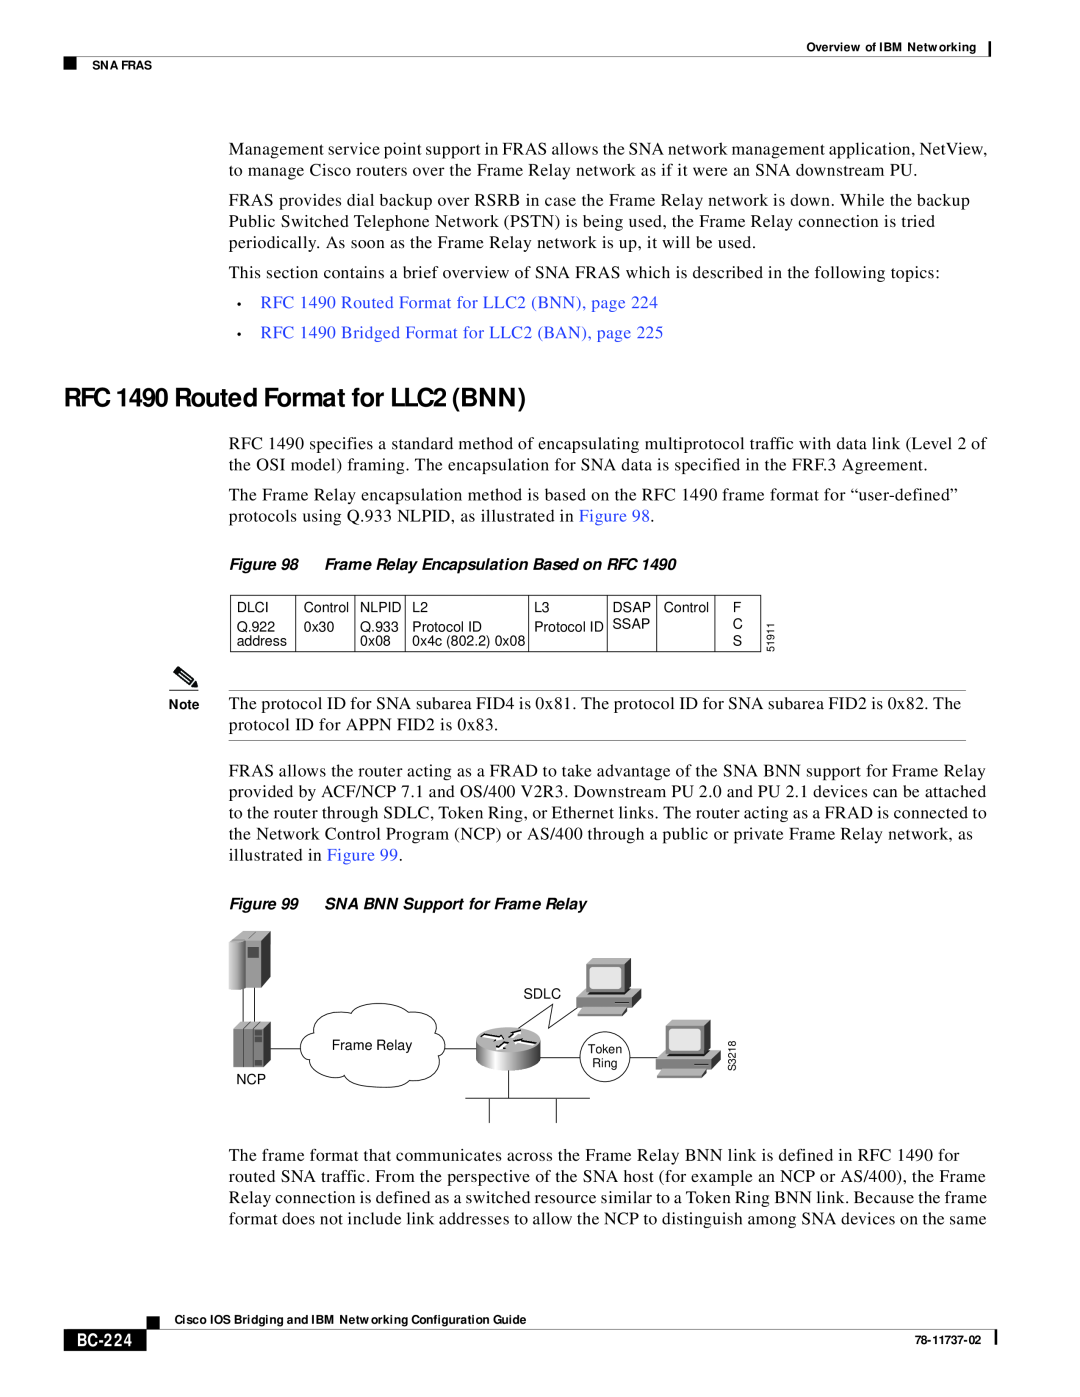 IBM BC-201 manual RFC 1490 Routed Format for LLC2 BNN, page, RFC 1490 Bridged Format for LLC2 BAN, page, BC-224 